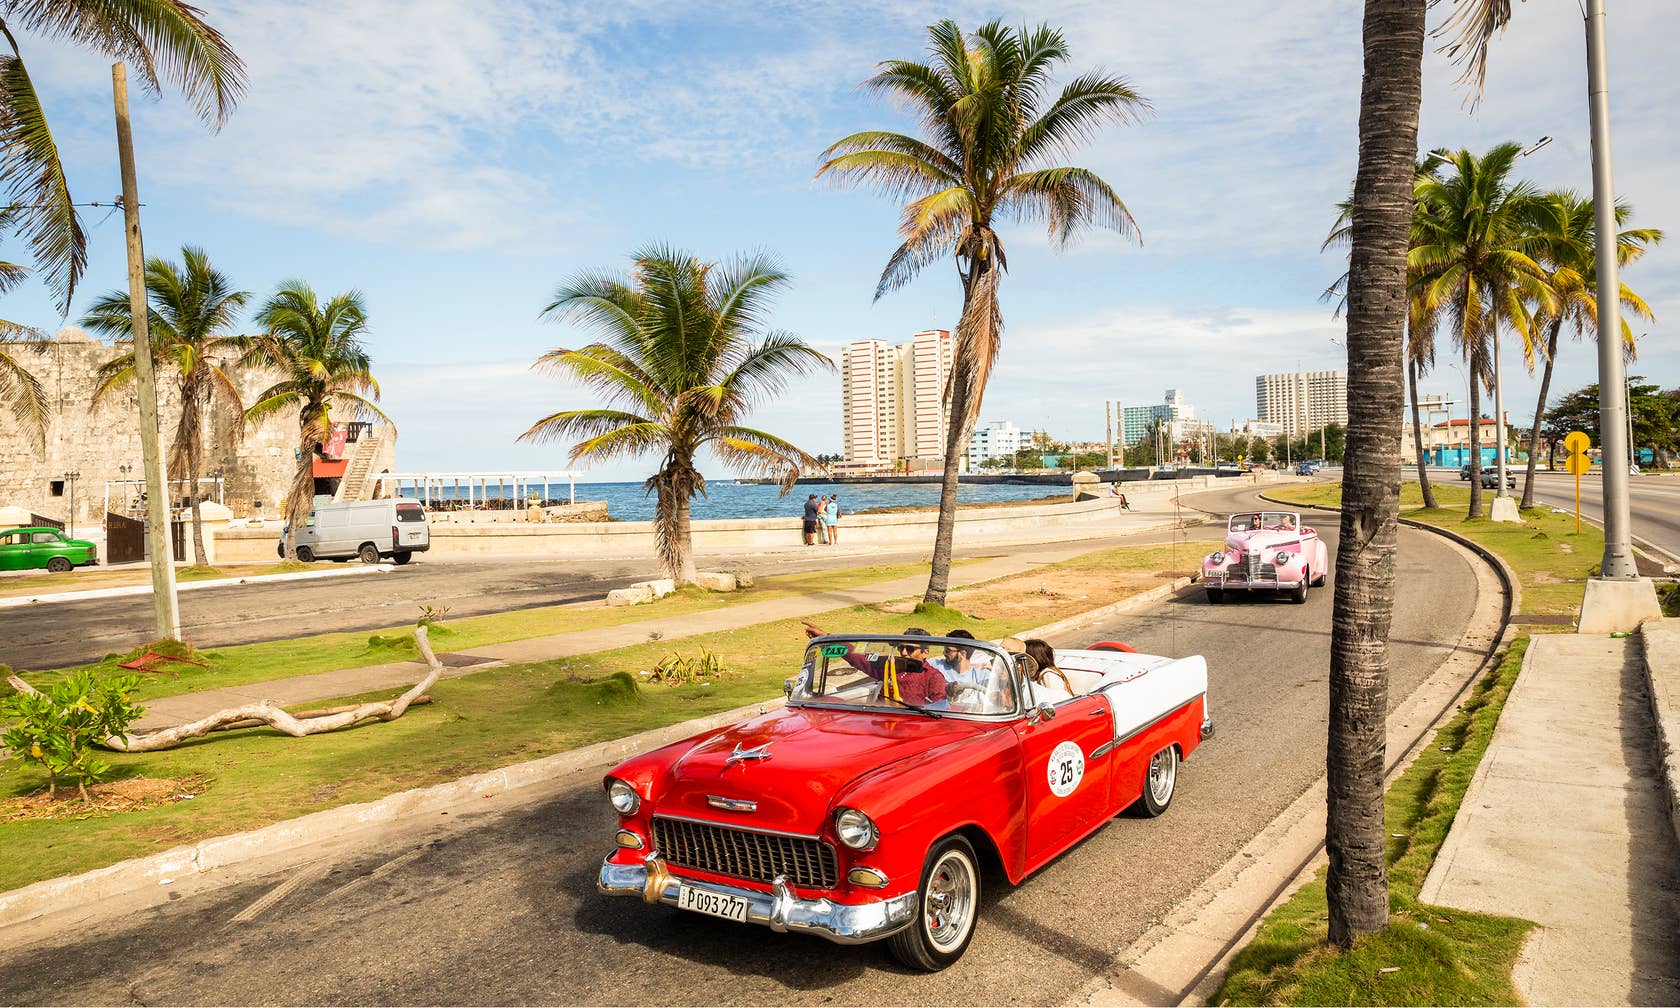 Ferienunterkünfte in Kuba